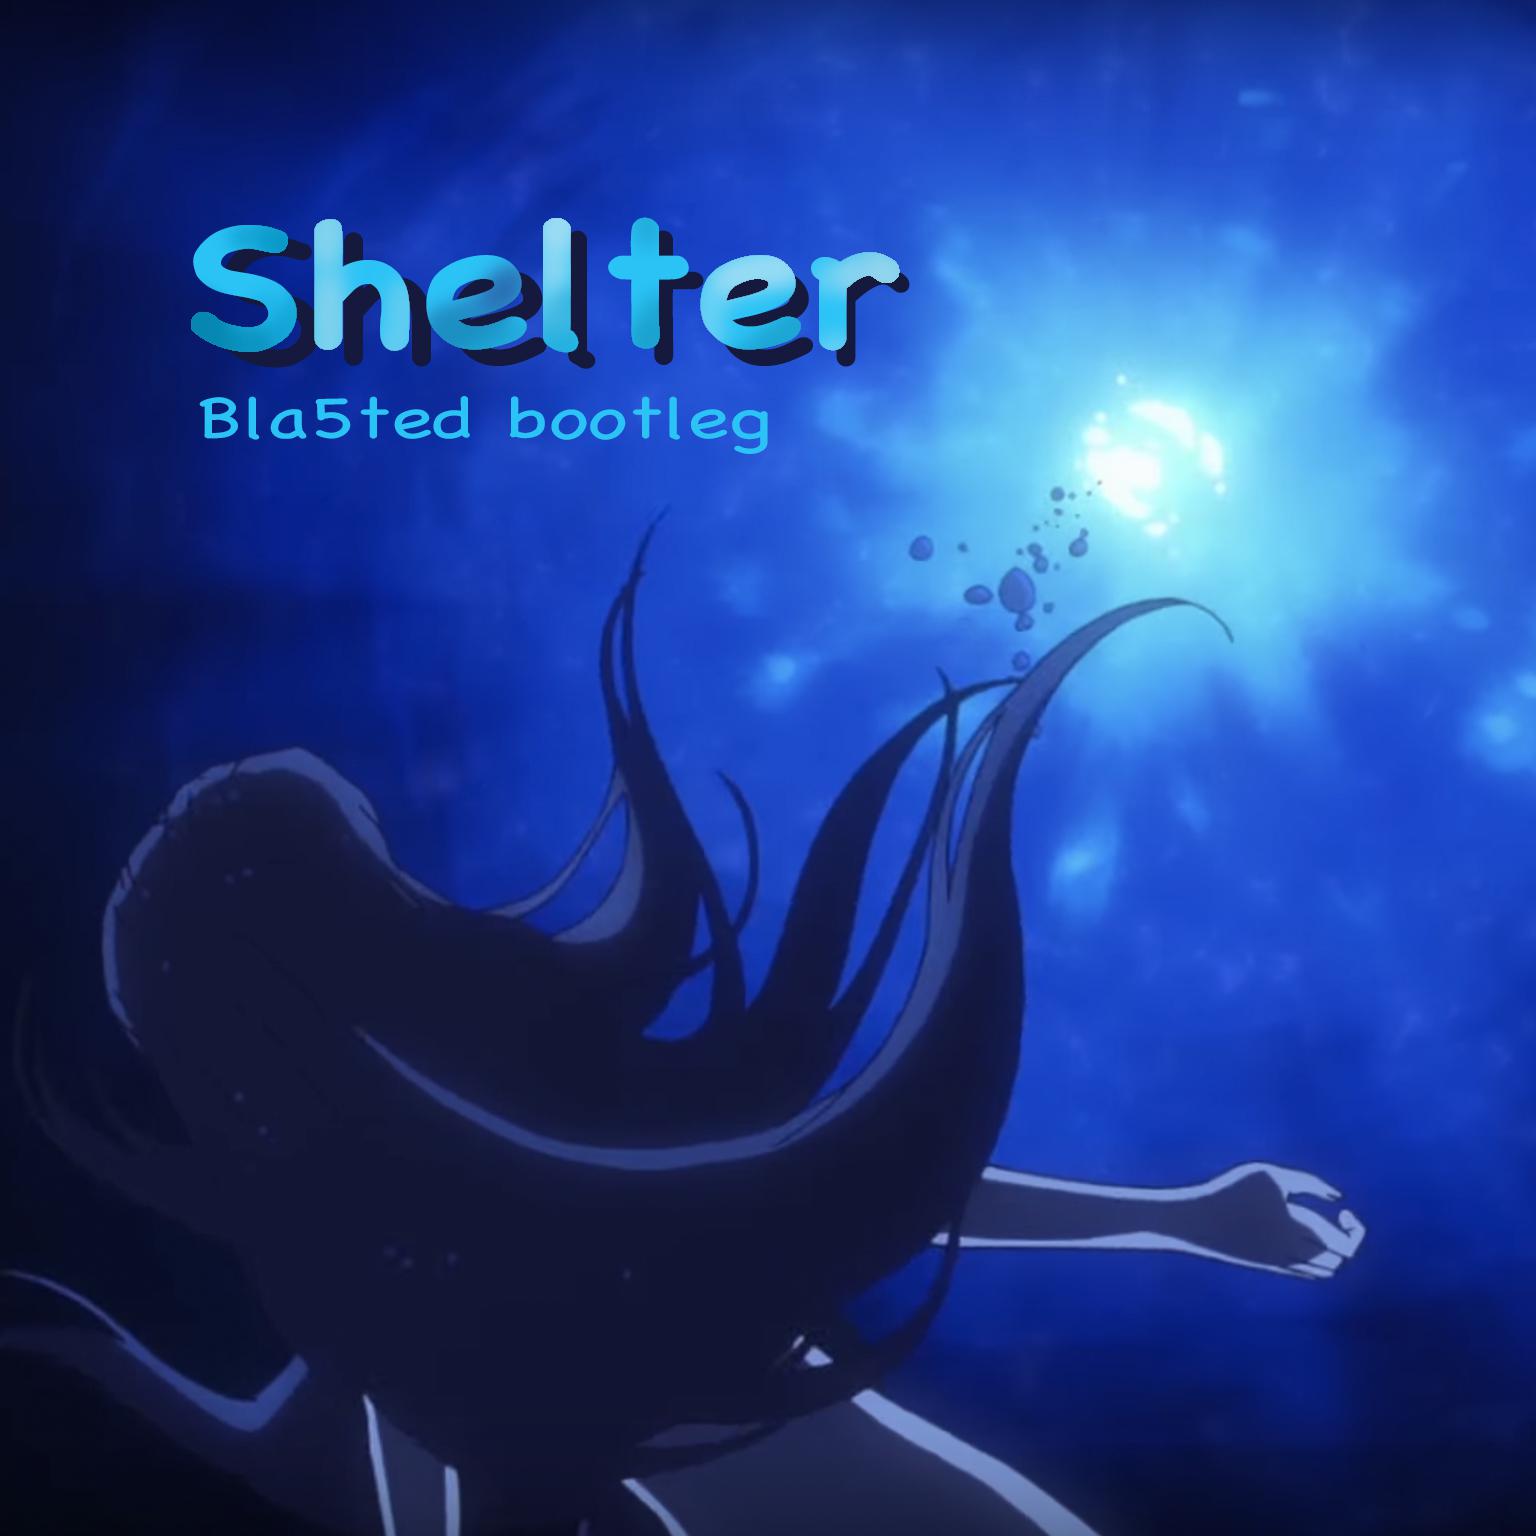 Shelter (Bla5ted bootleg)